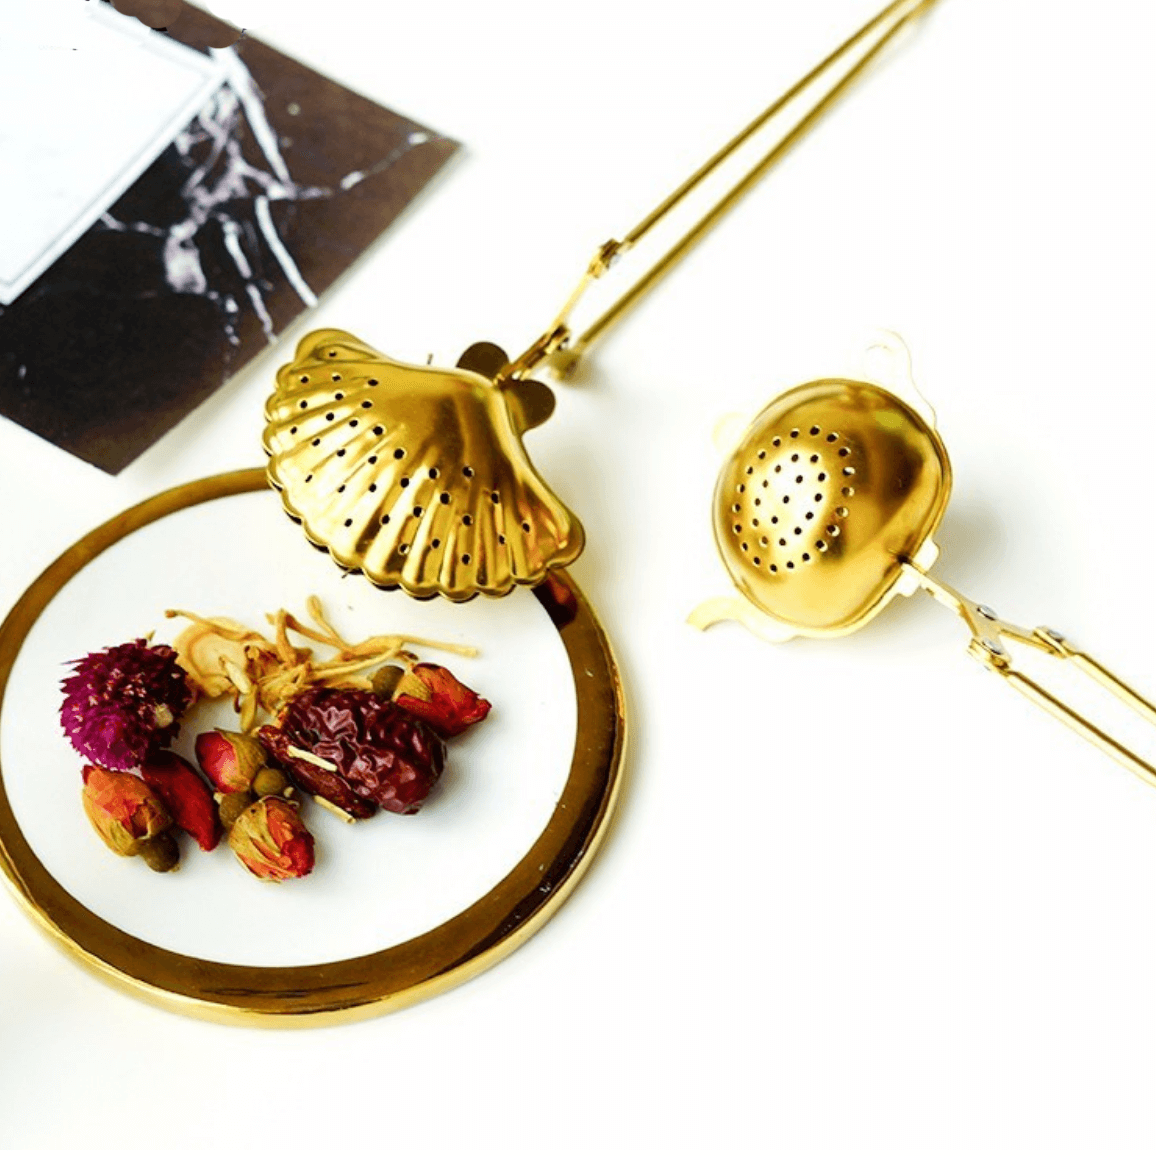 Gold Stainless Lovely Tea Infuser / Strainer - Nordic Side - 